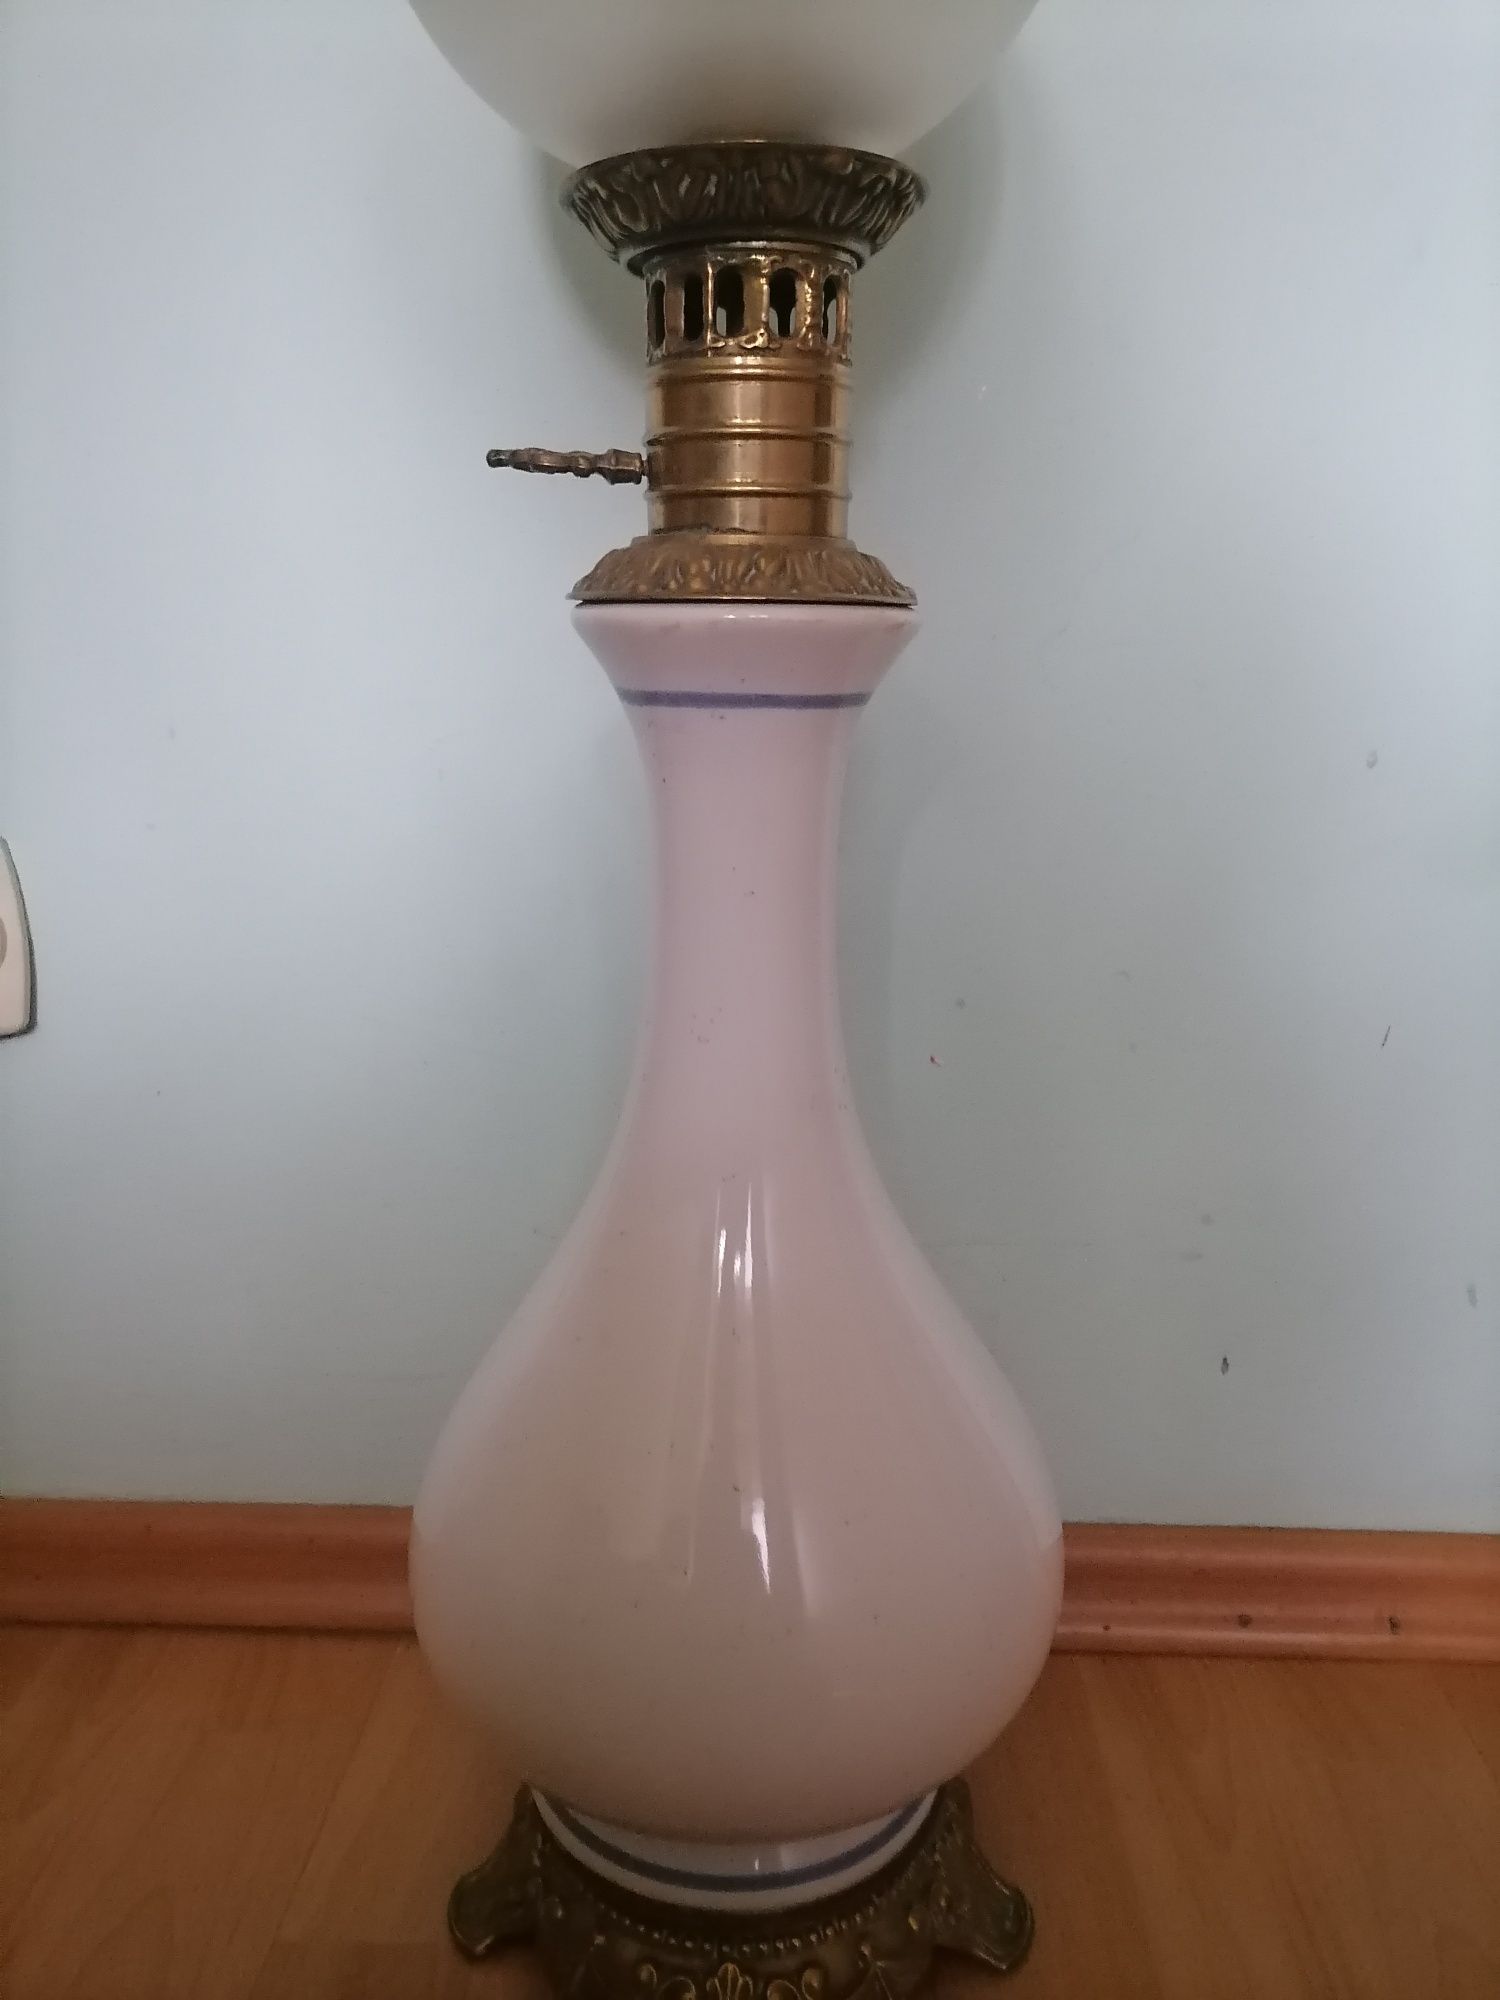 Dekoracyjna lampa naftowa